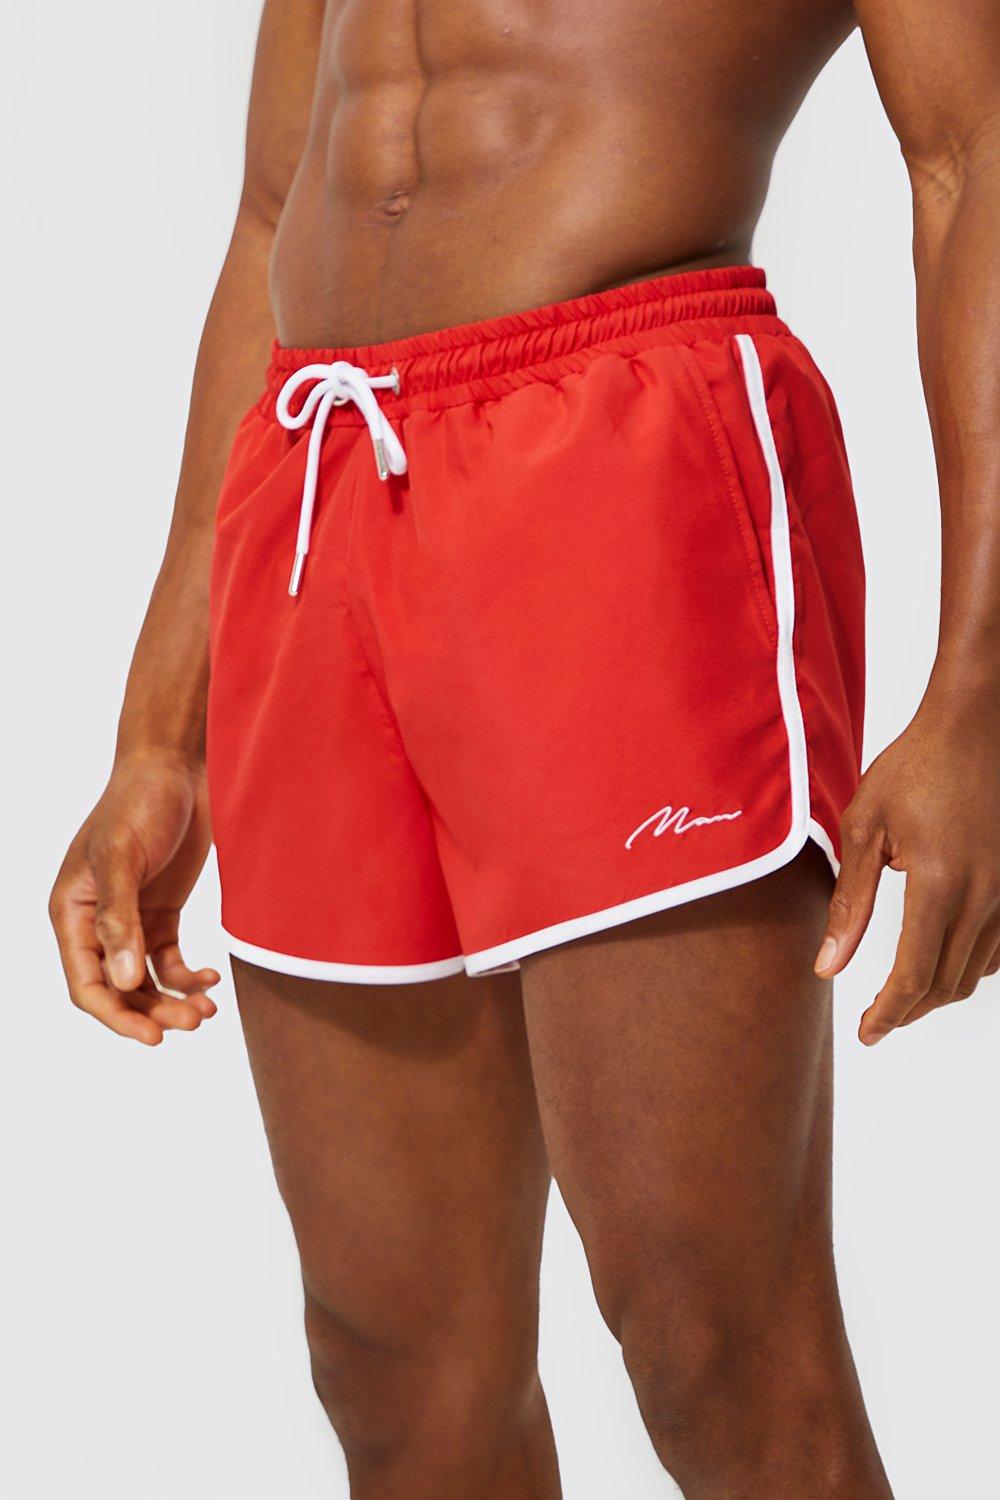 Buy COACH Men's Signature Swim Trunks Shorts Bathing Suit, Signature  Multicolor, Small at